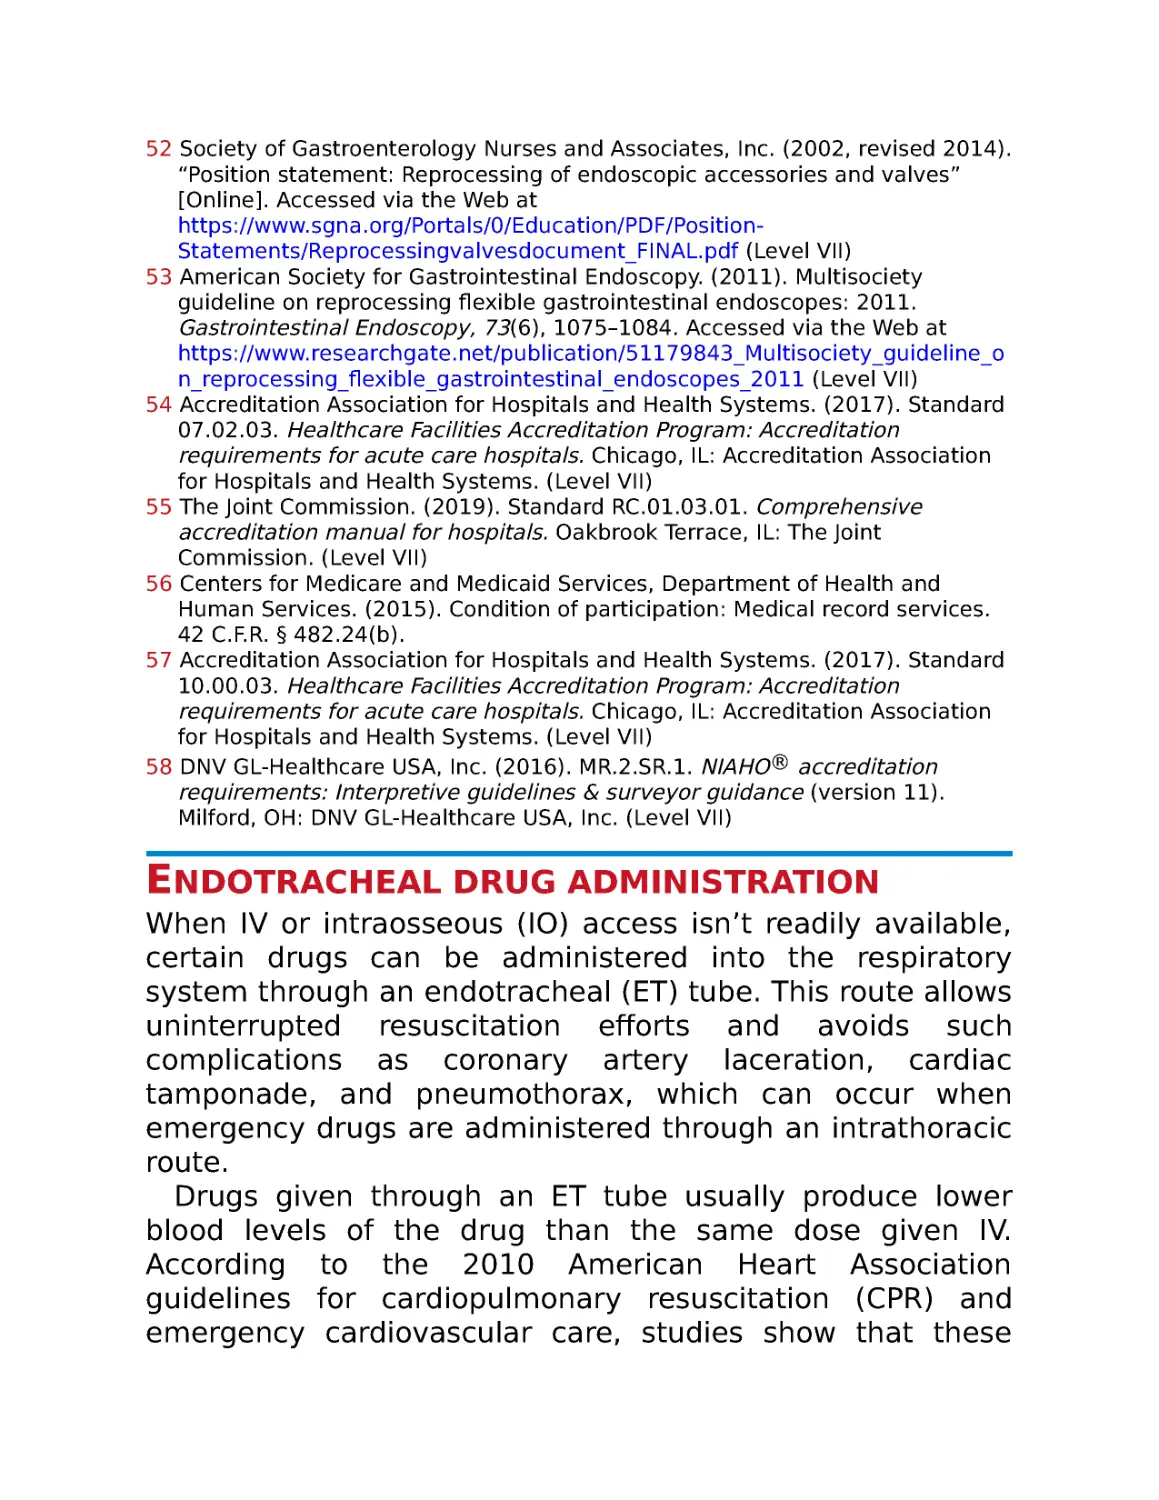 Endotracheal drug administration